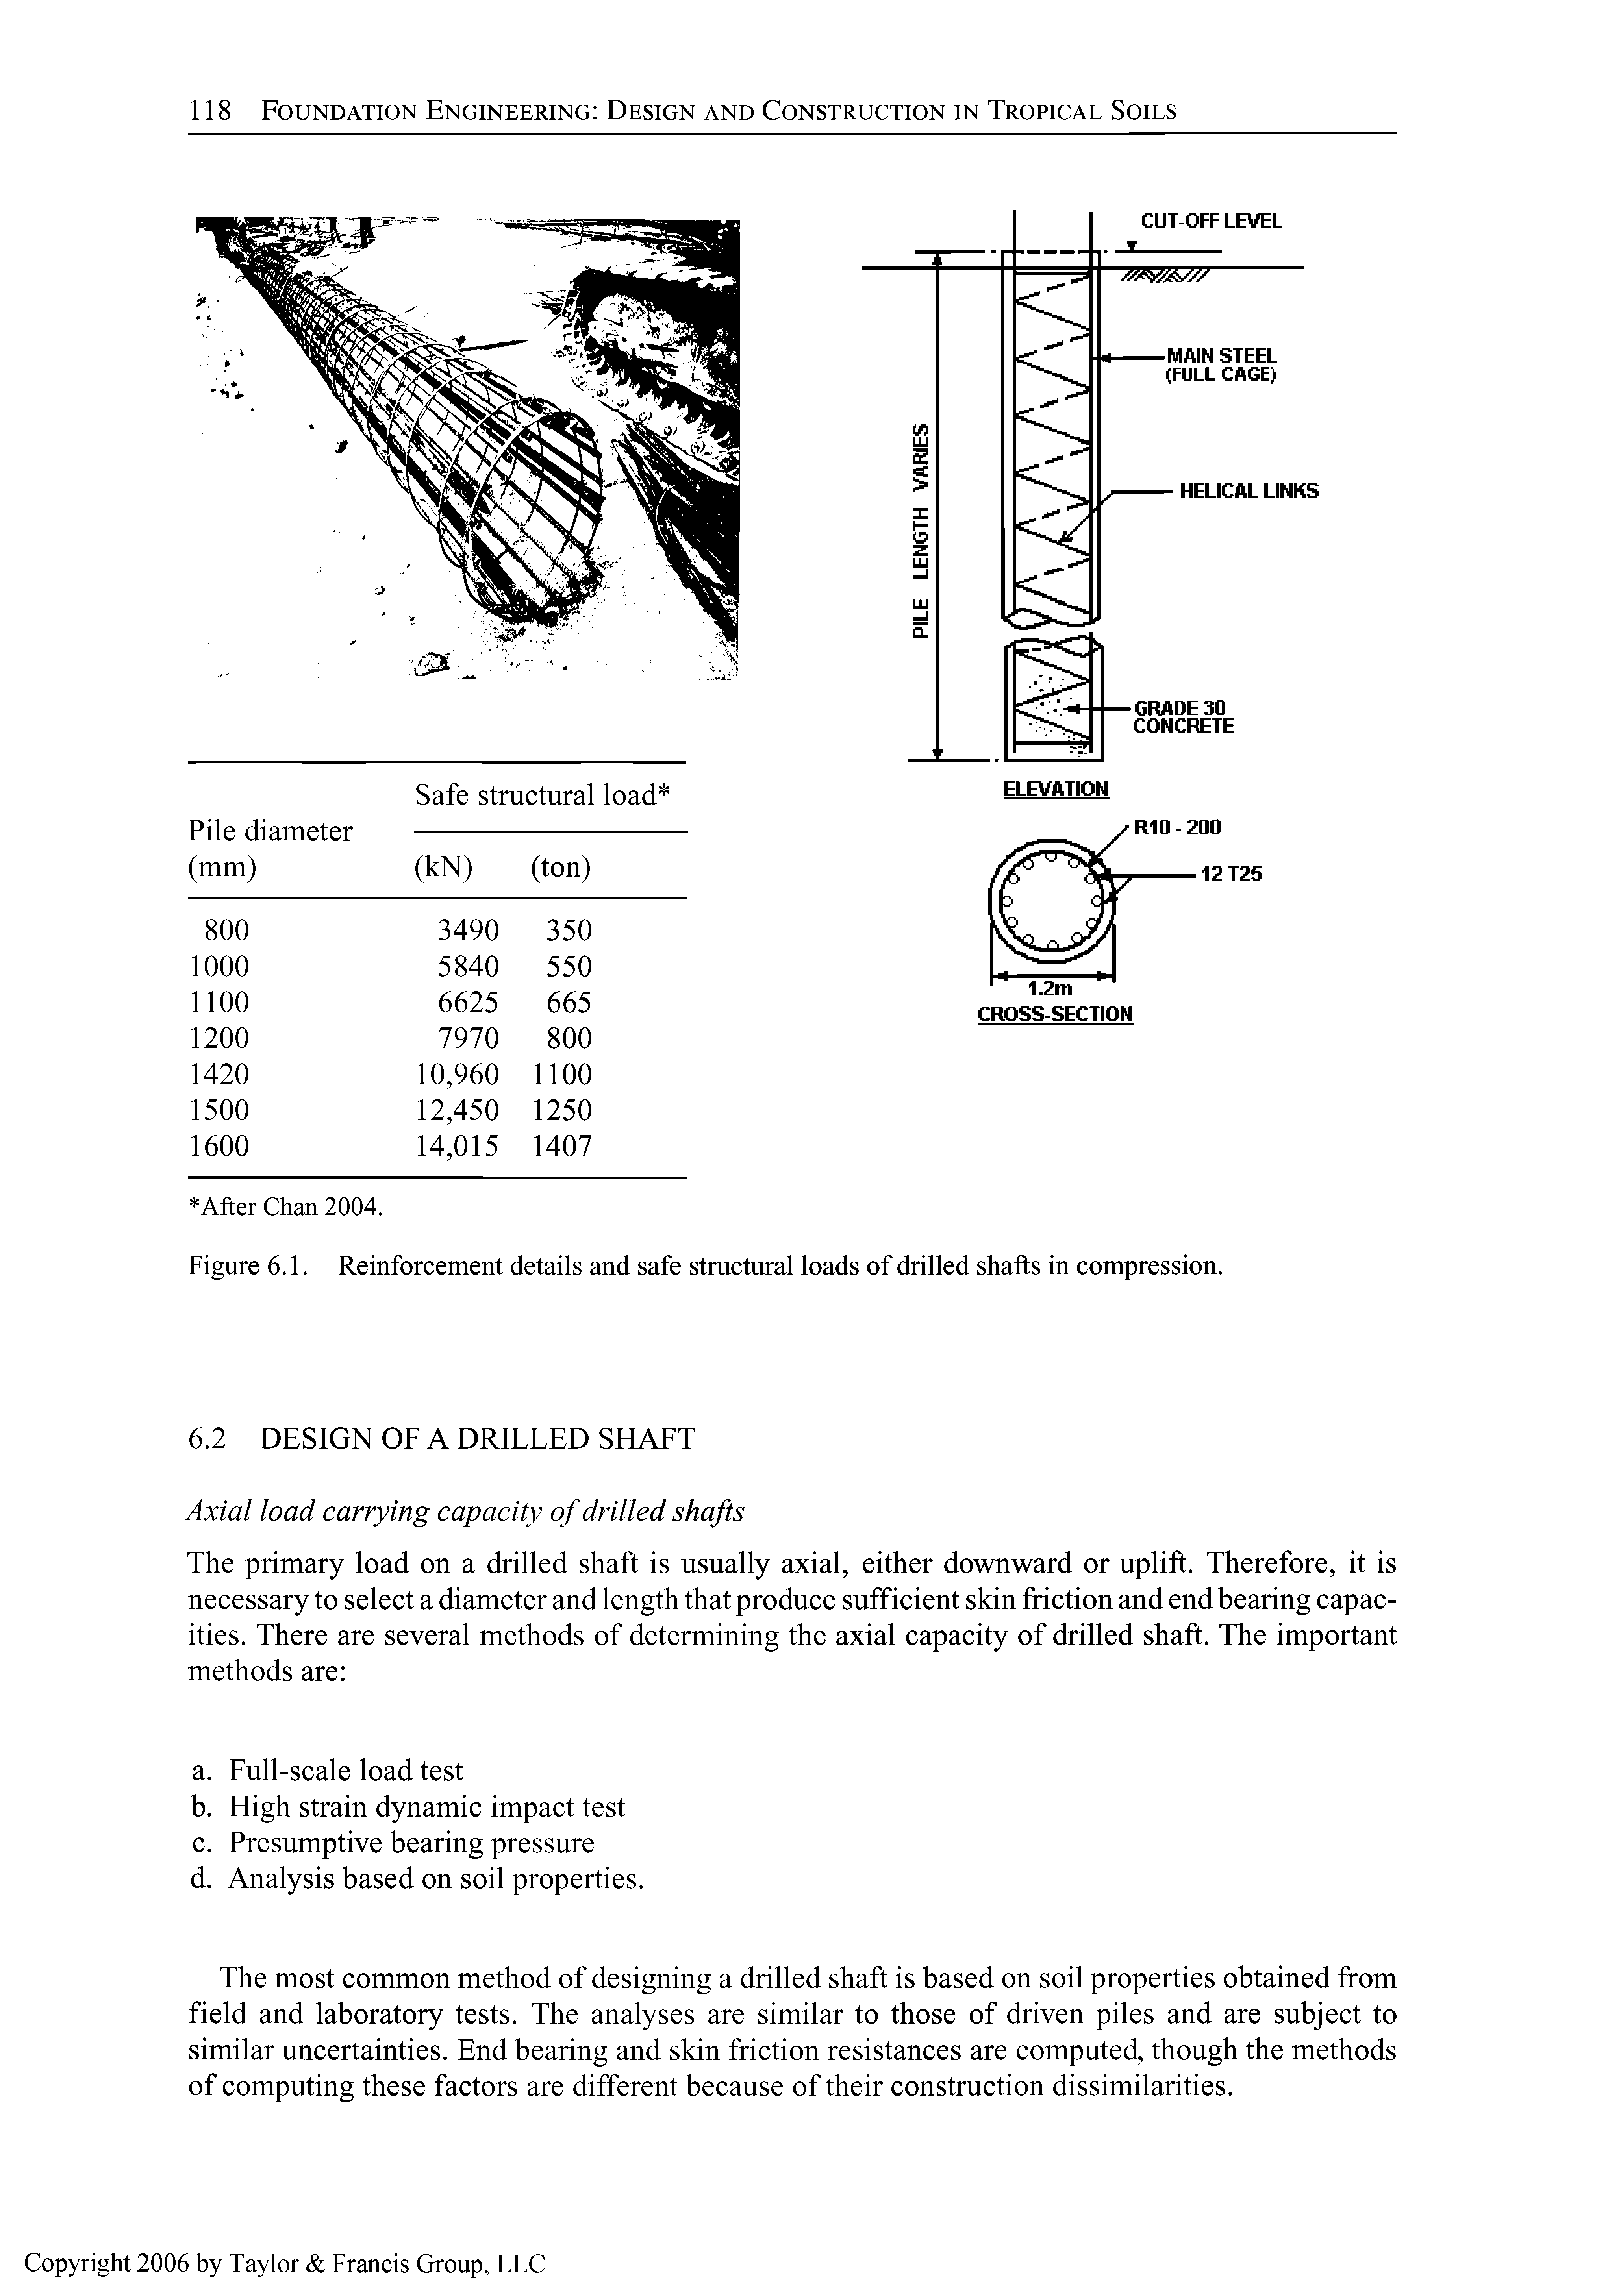 Figure 6.1. Reinforcement details and safe structural loads of drilled shafts in compression.